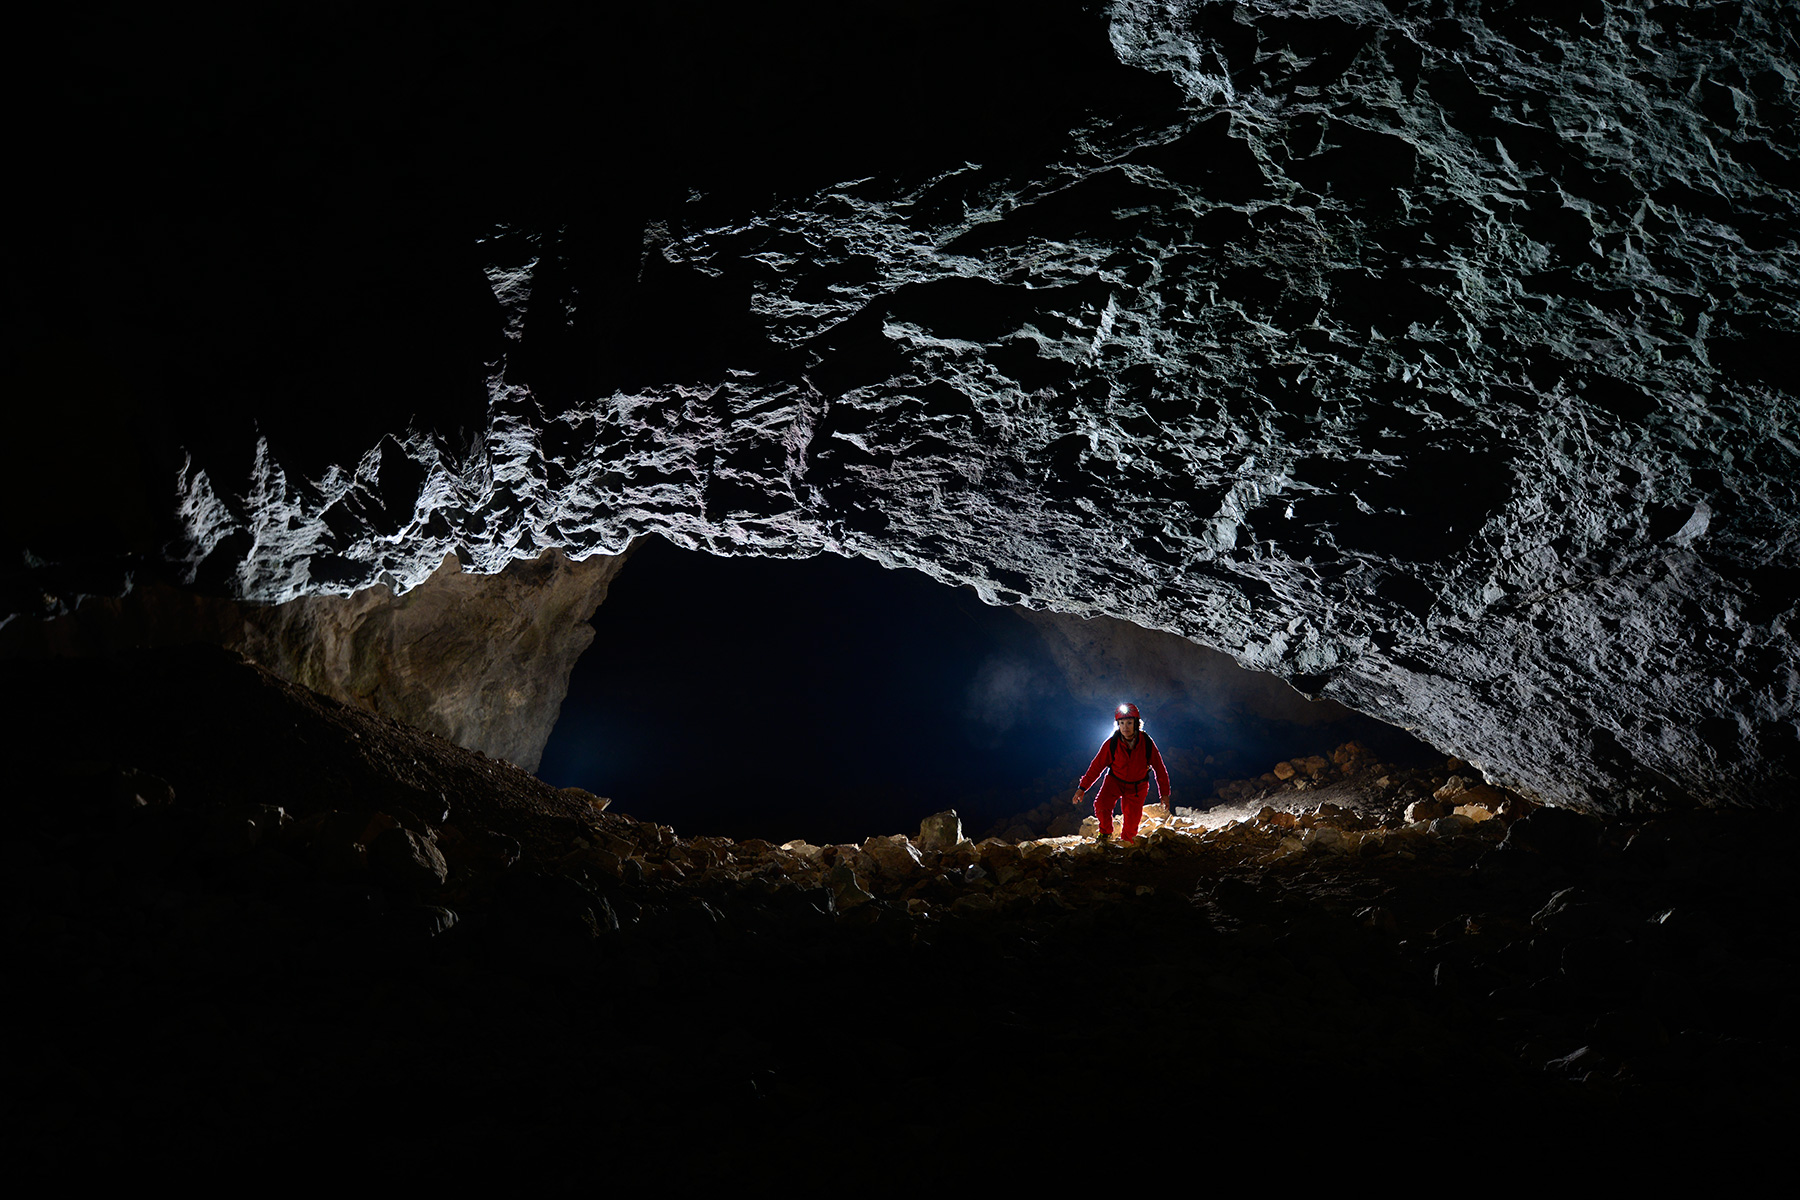 Ilgarini Cave (Kure Mountains National Park - Turquie) : progression dans galerie plongeante.